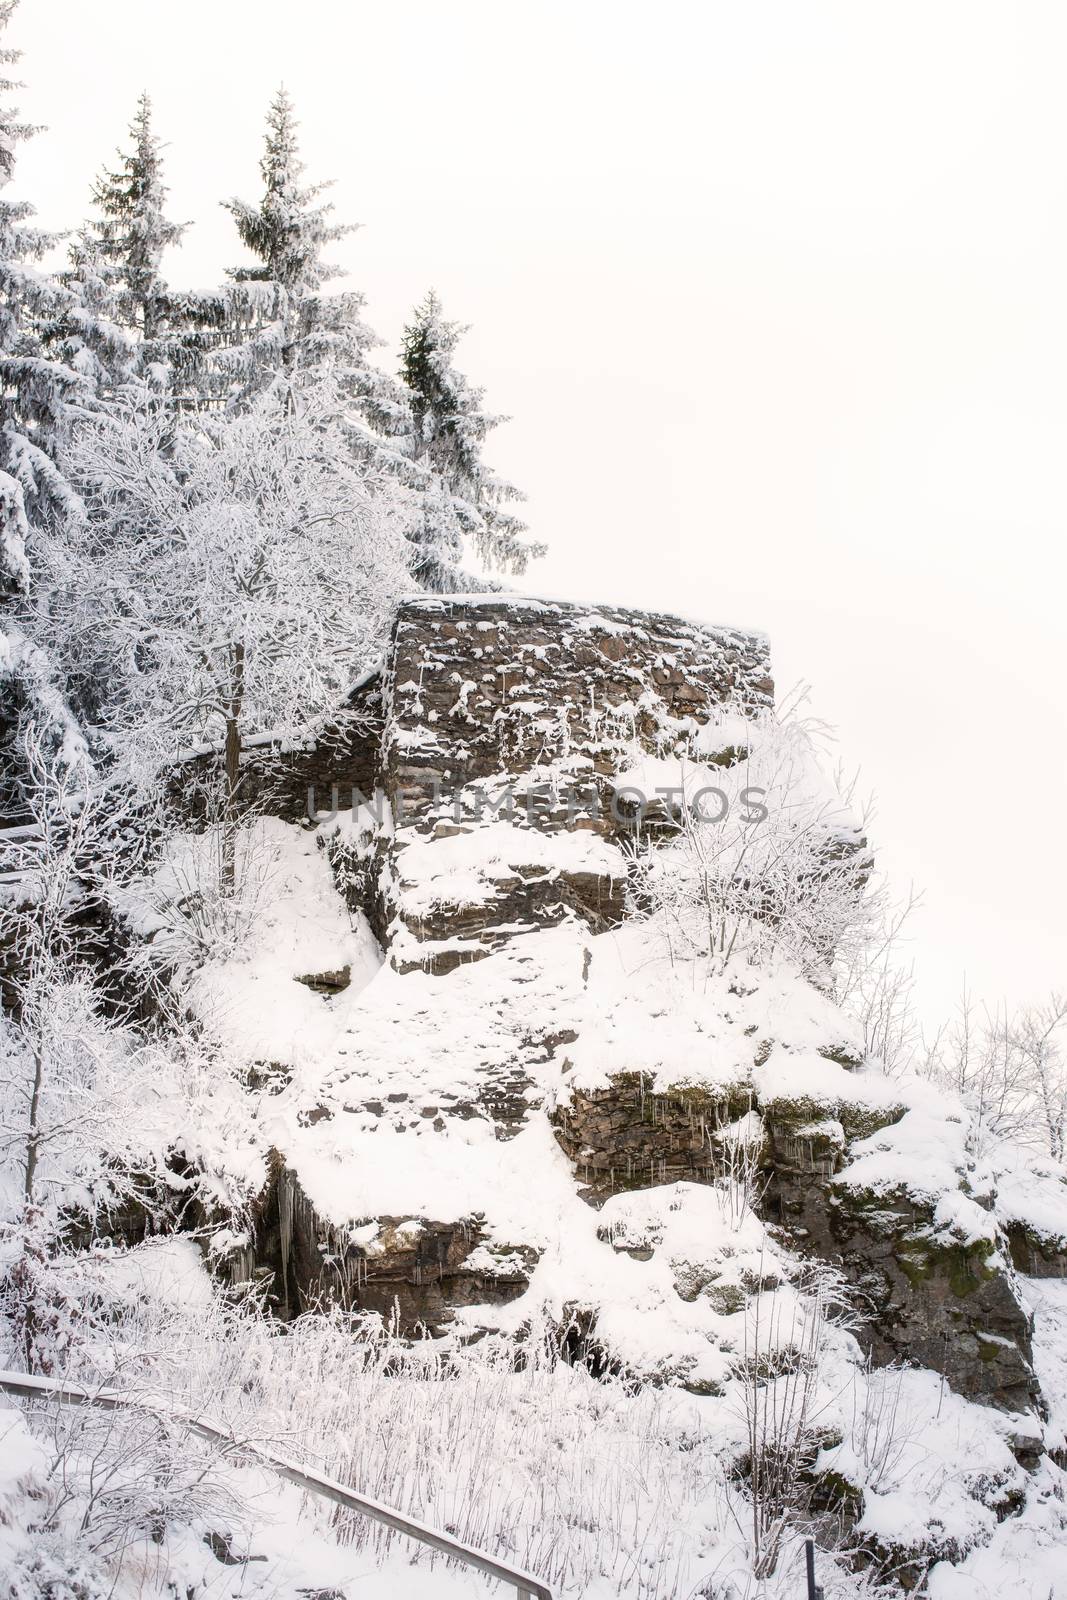 Hindenburgkanzel in the winter with snow, Bavaria by sandra_fotodesign